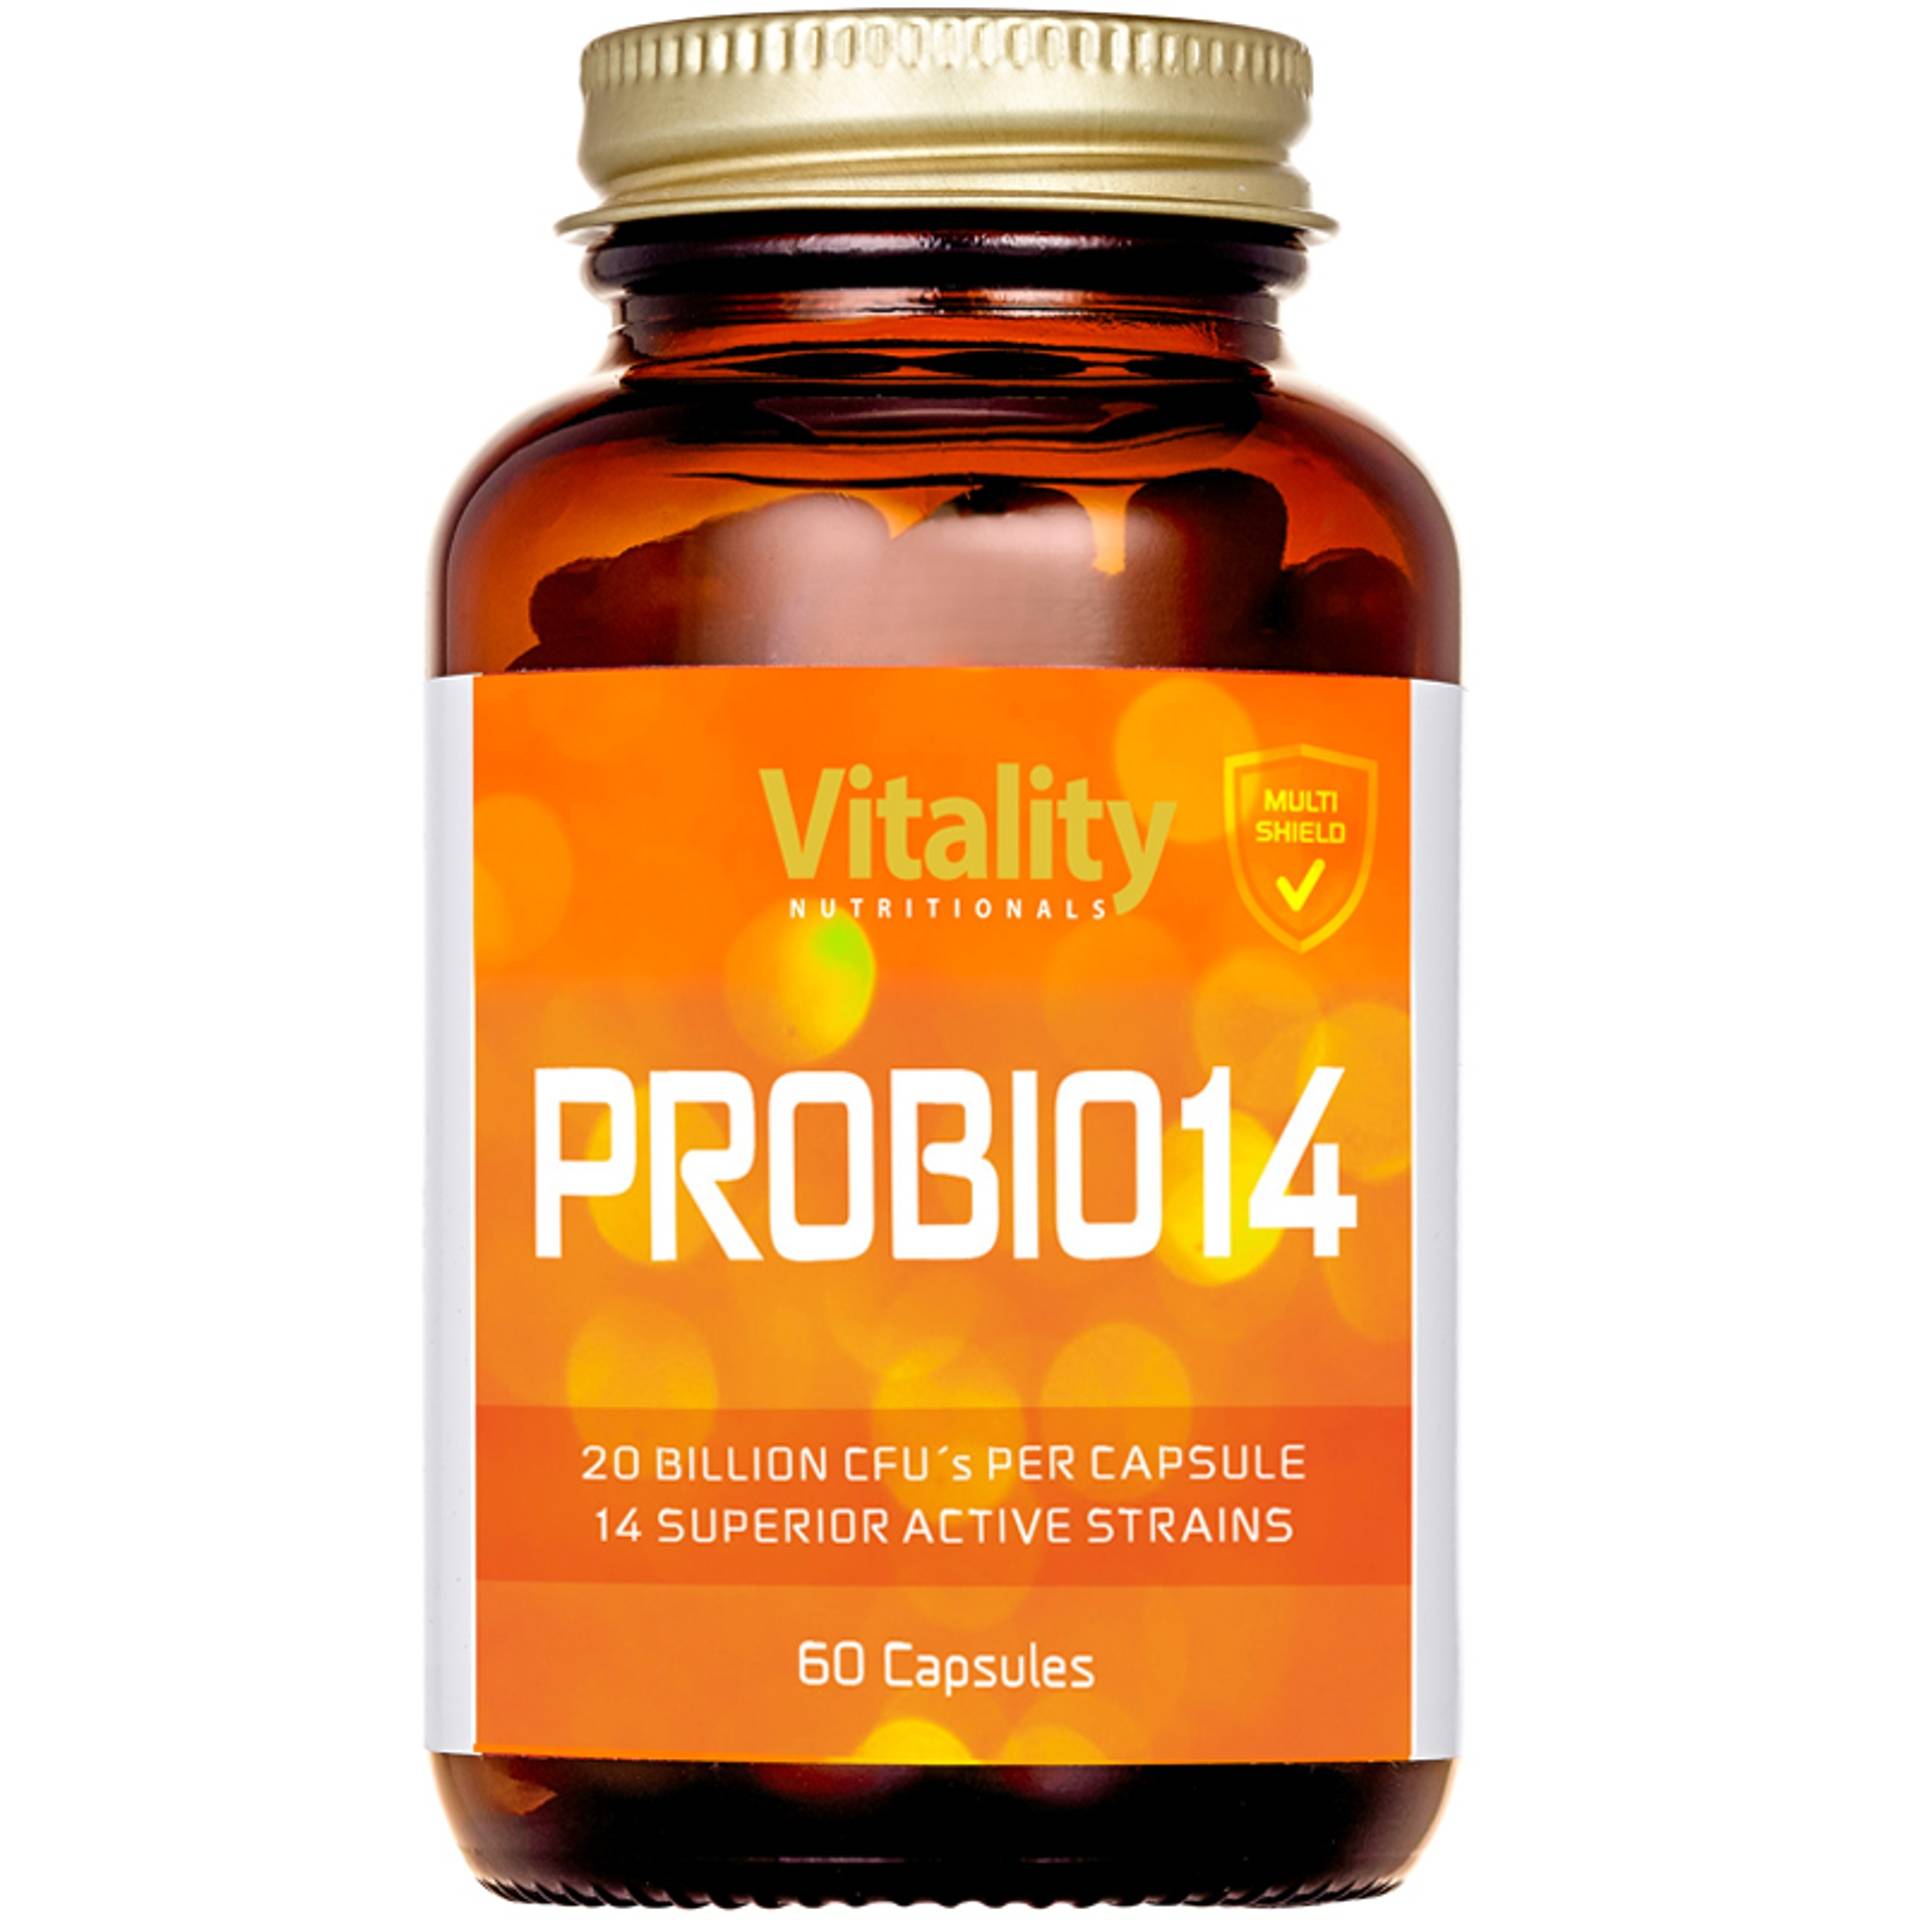 Vitality-Nutritionals_PROBIO14_60capsules.jpg